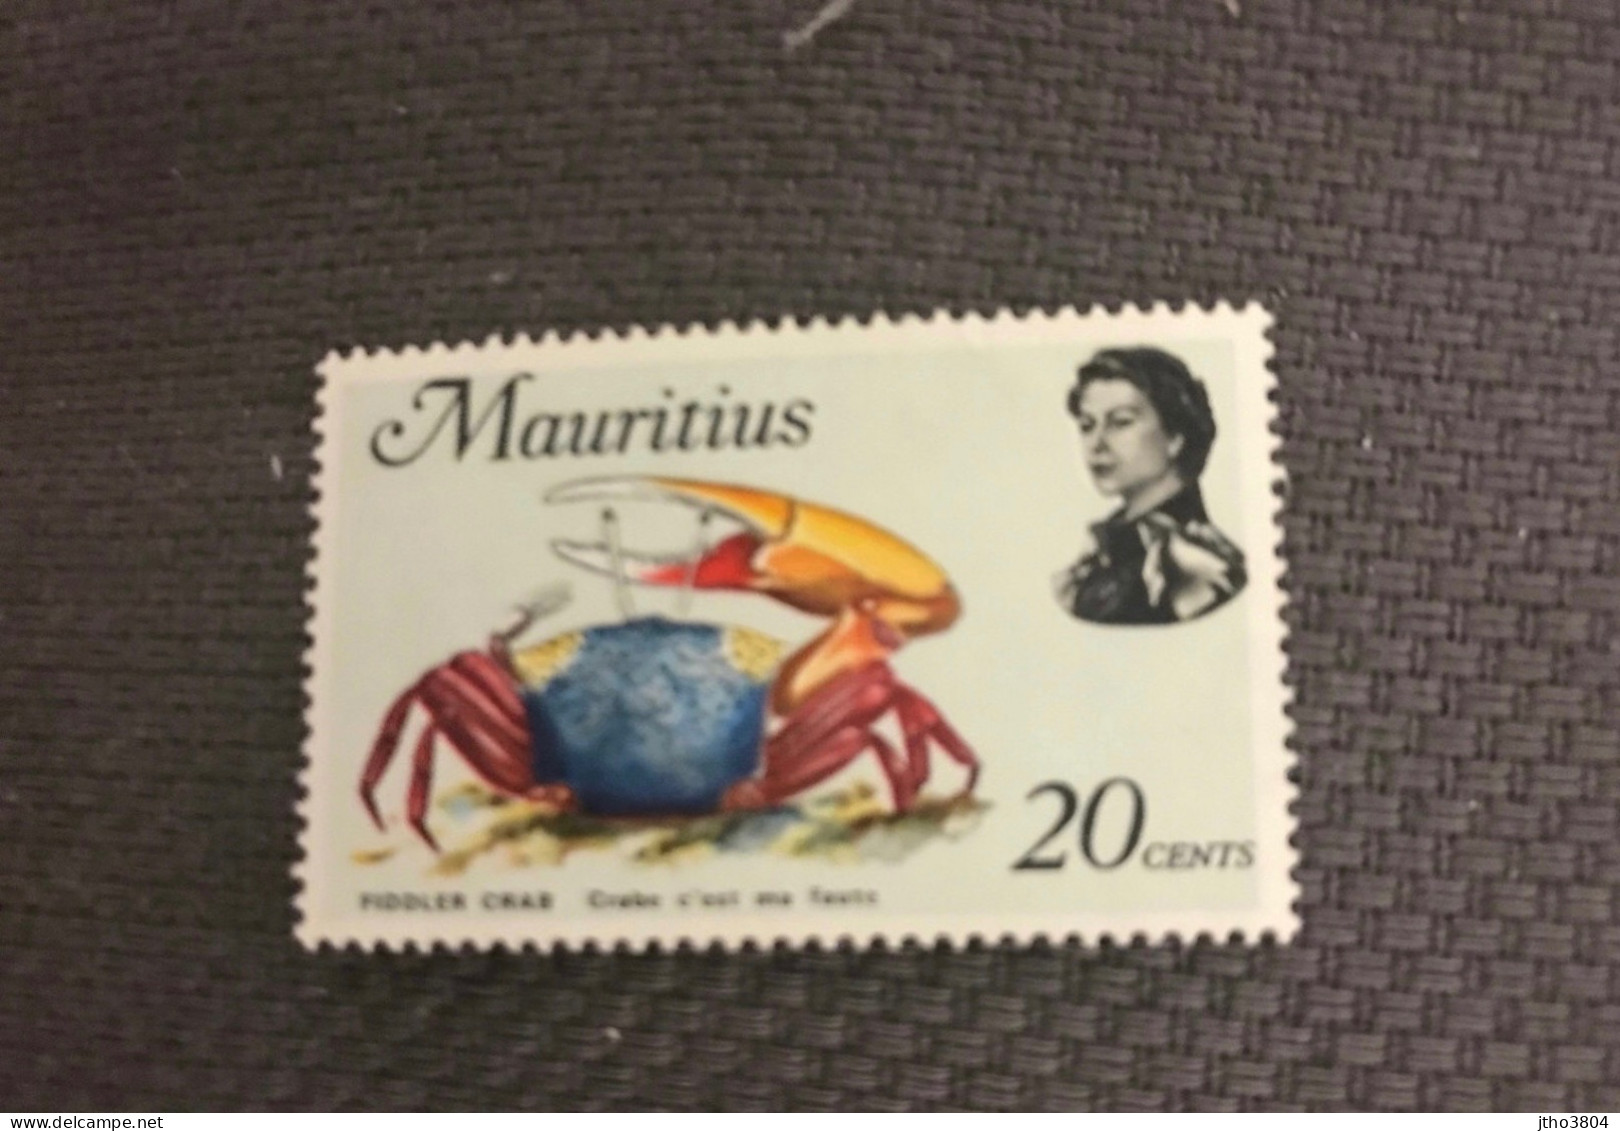 MAURICE 1969 1v Neuf MNH ** Mi 330 Marine Life Shrimp Conchas Shells Muscheln Conchoglie MAURITIUS - Mauritius (1968-...)